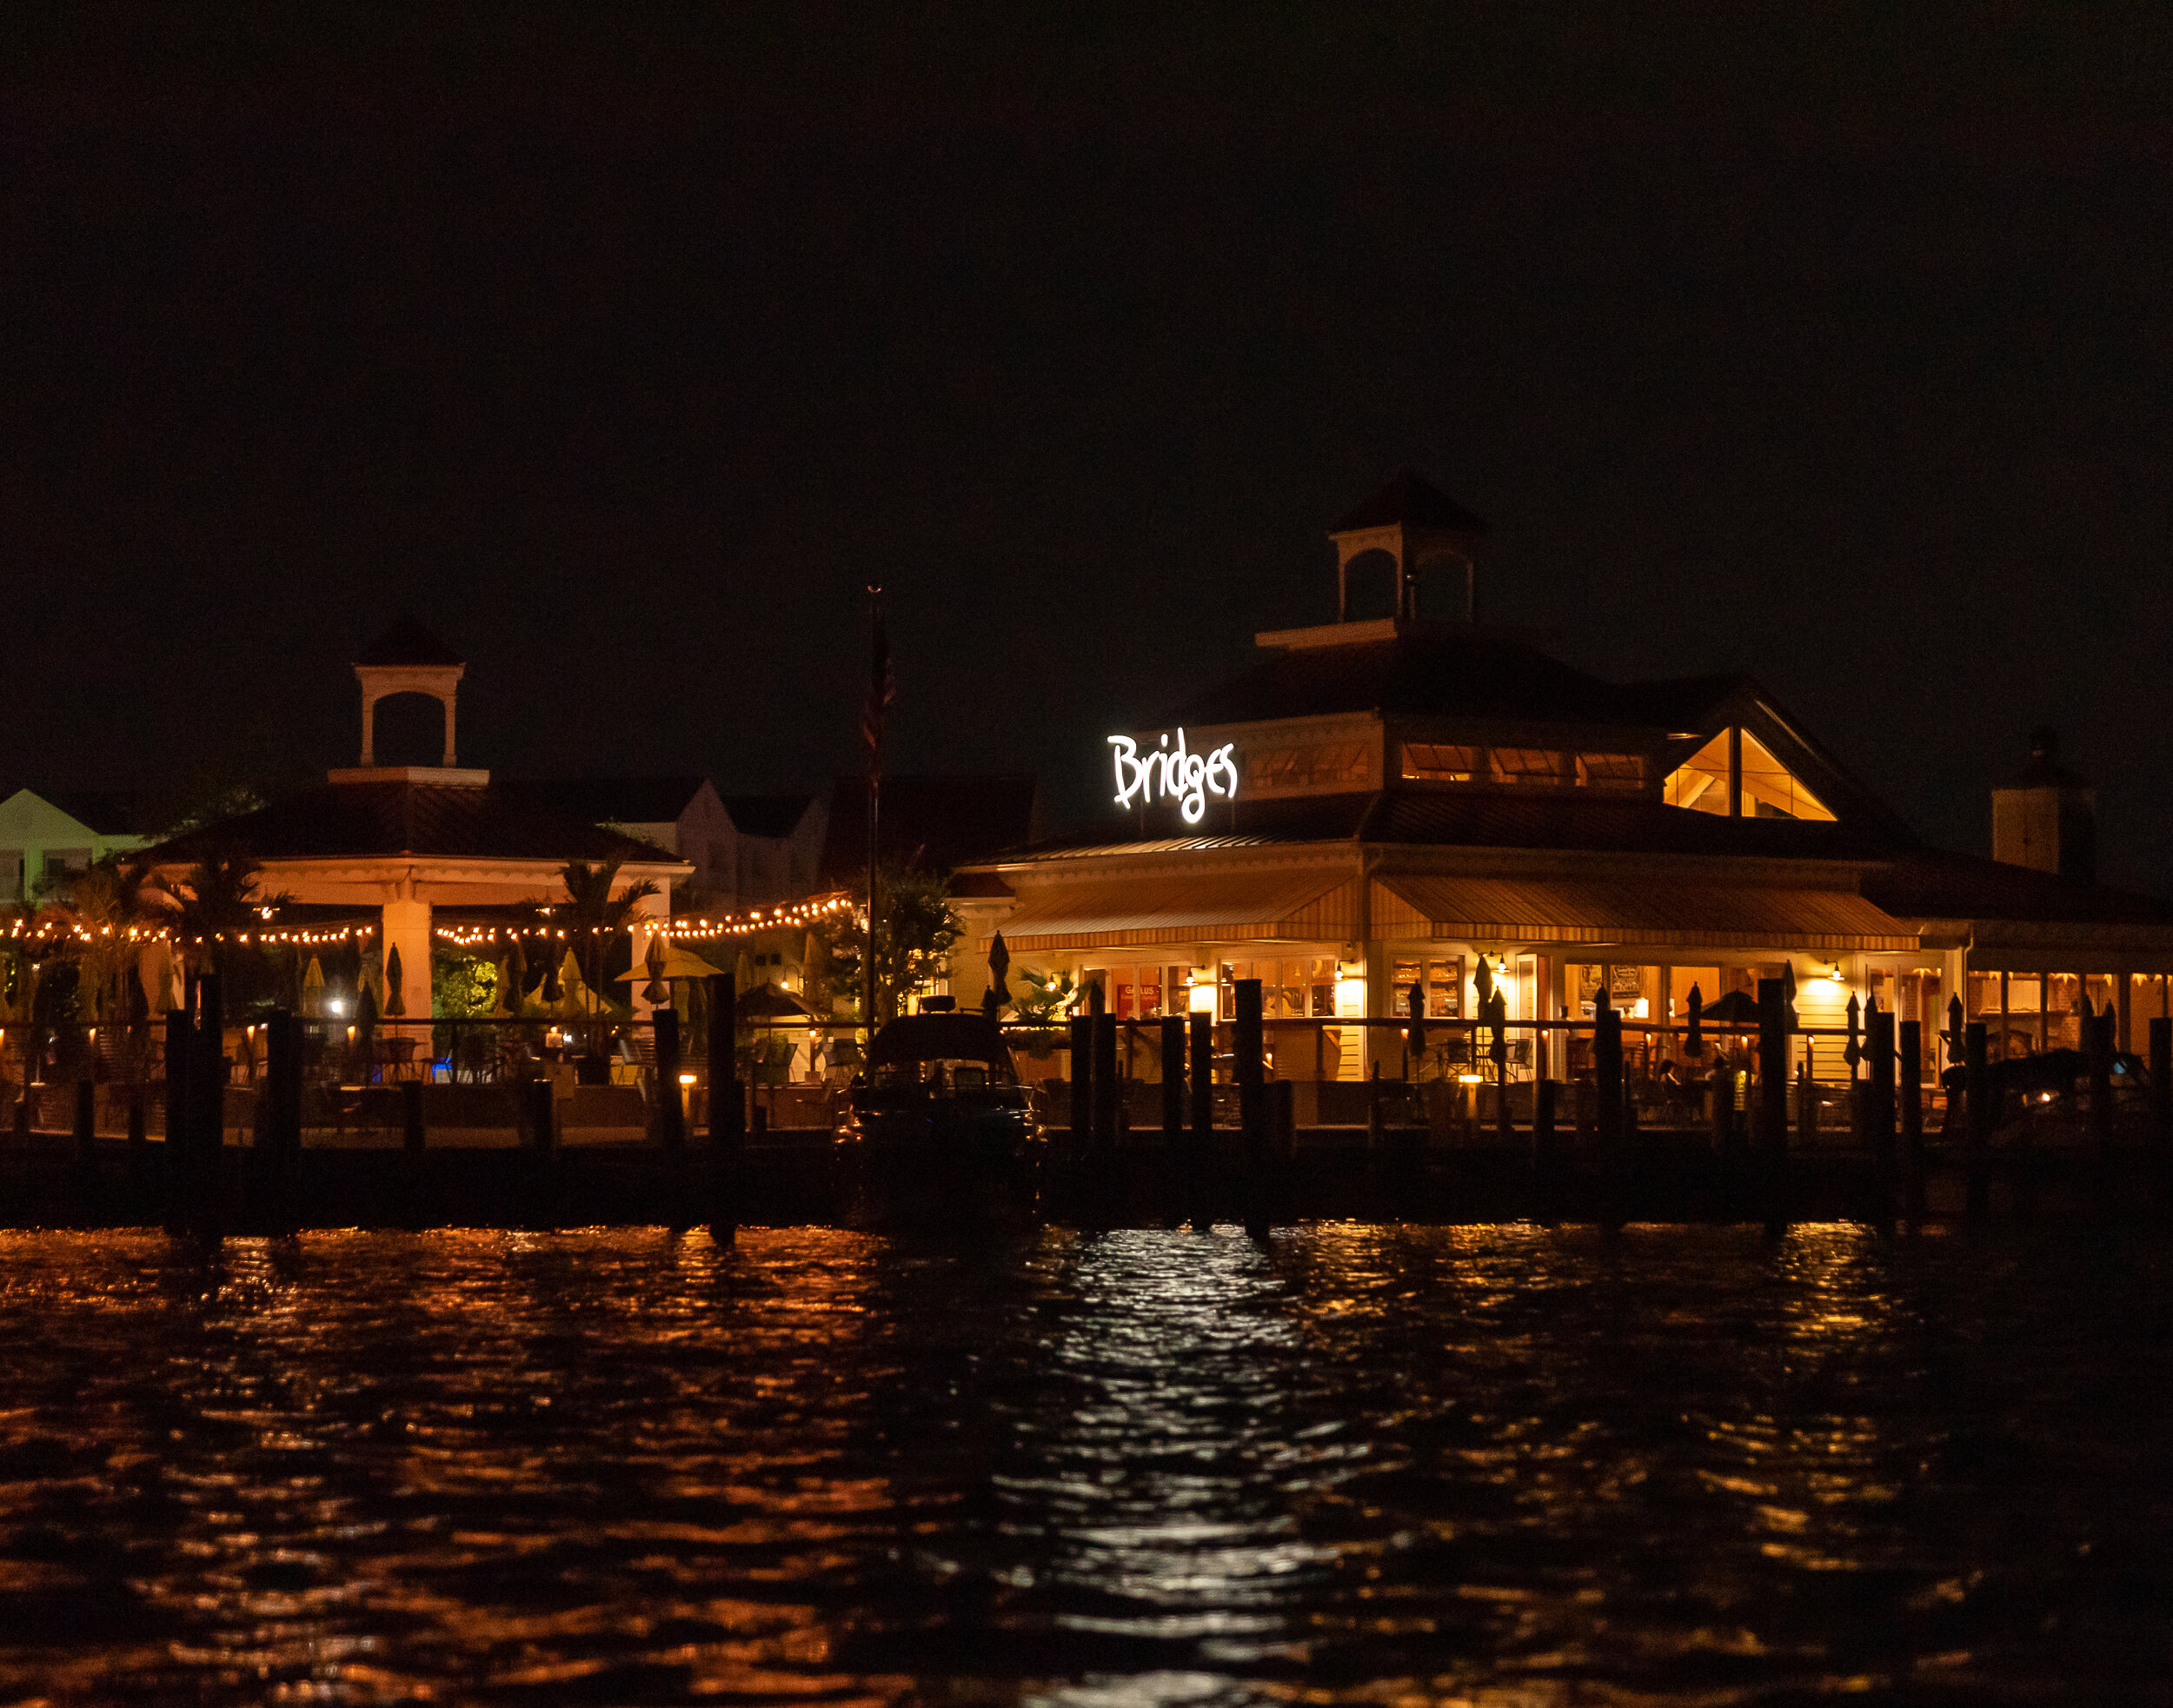 The Bridges Restaurant, Kent Island, MD